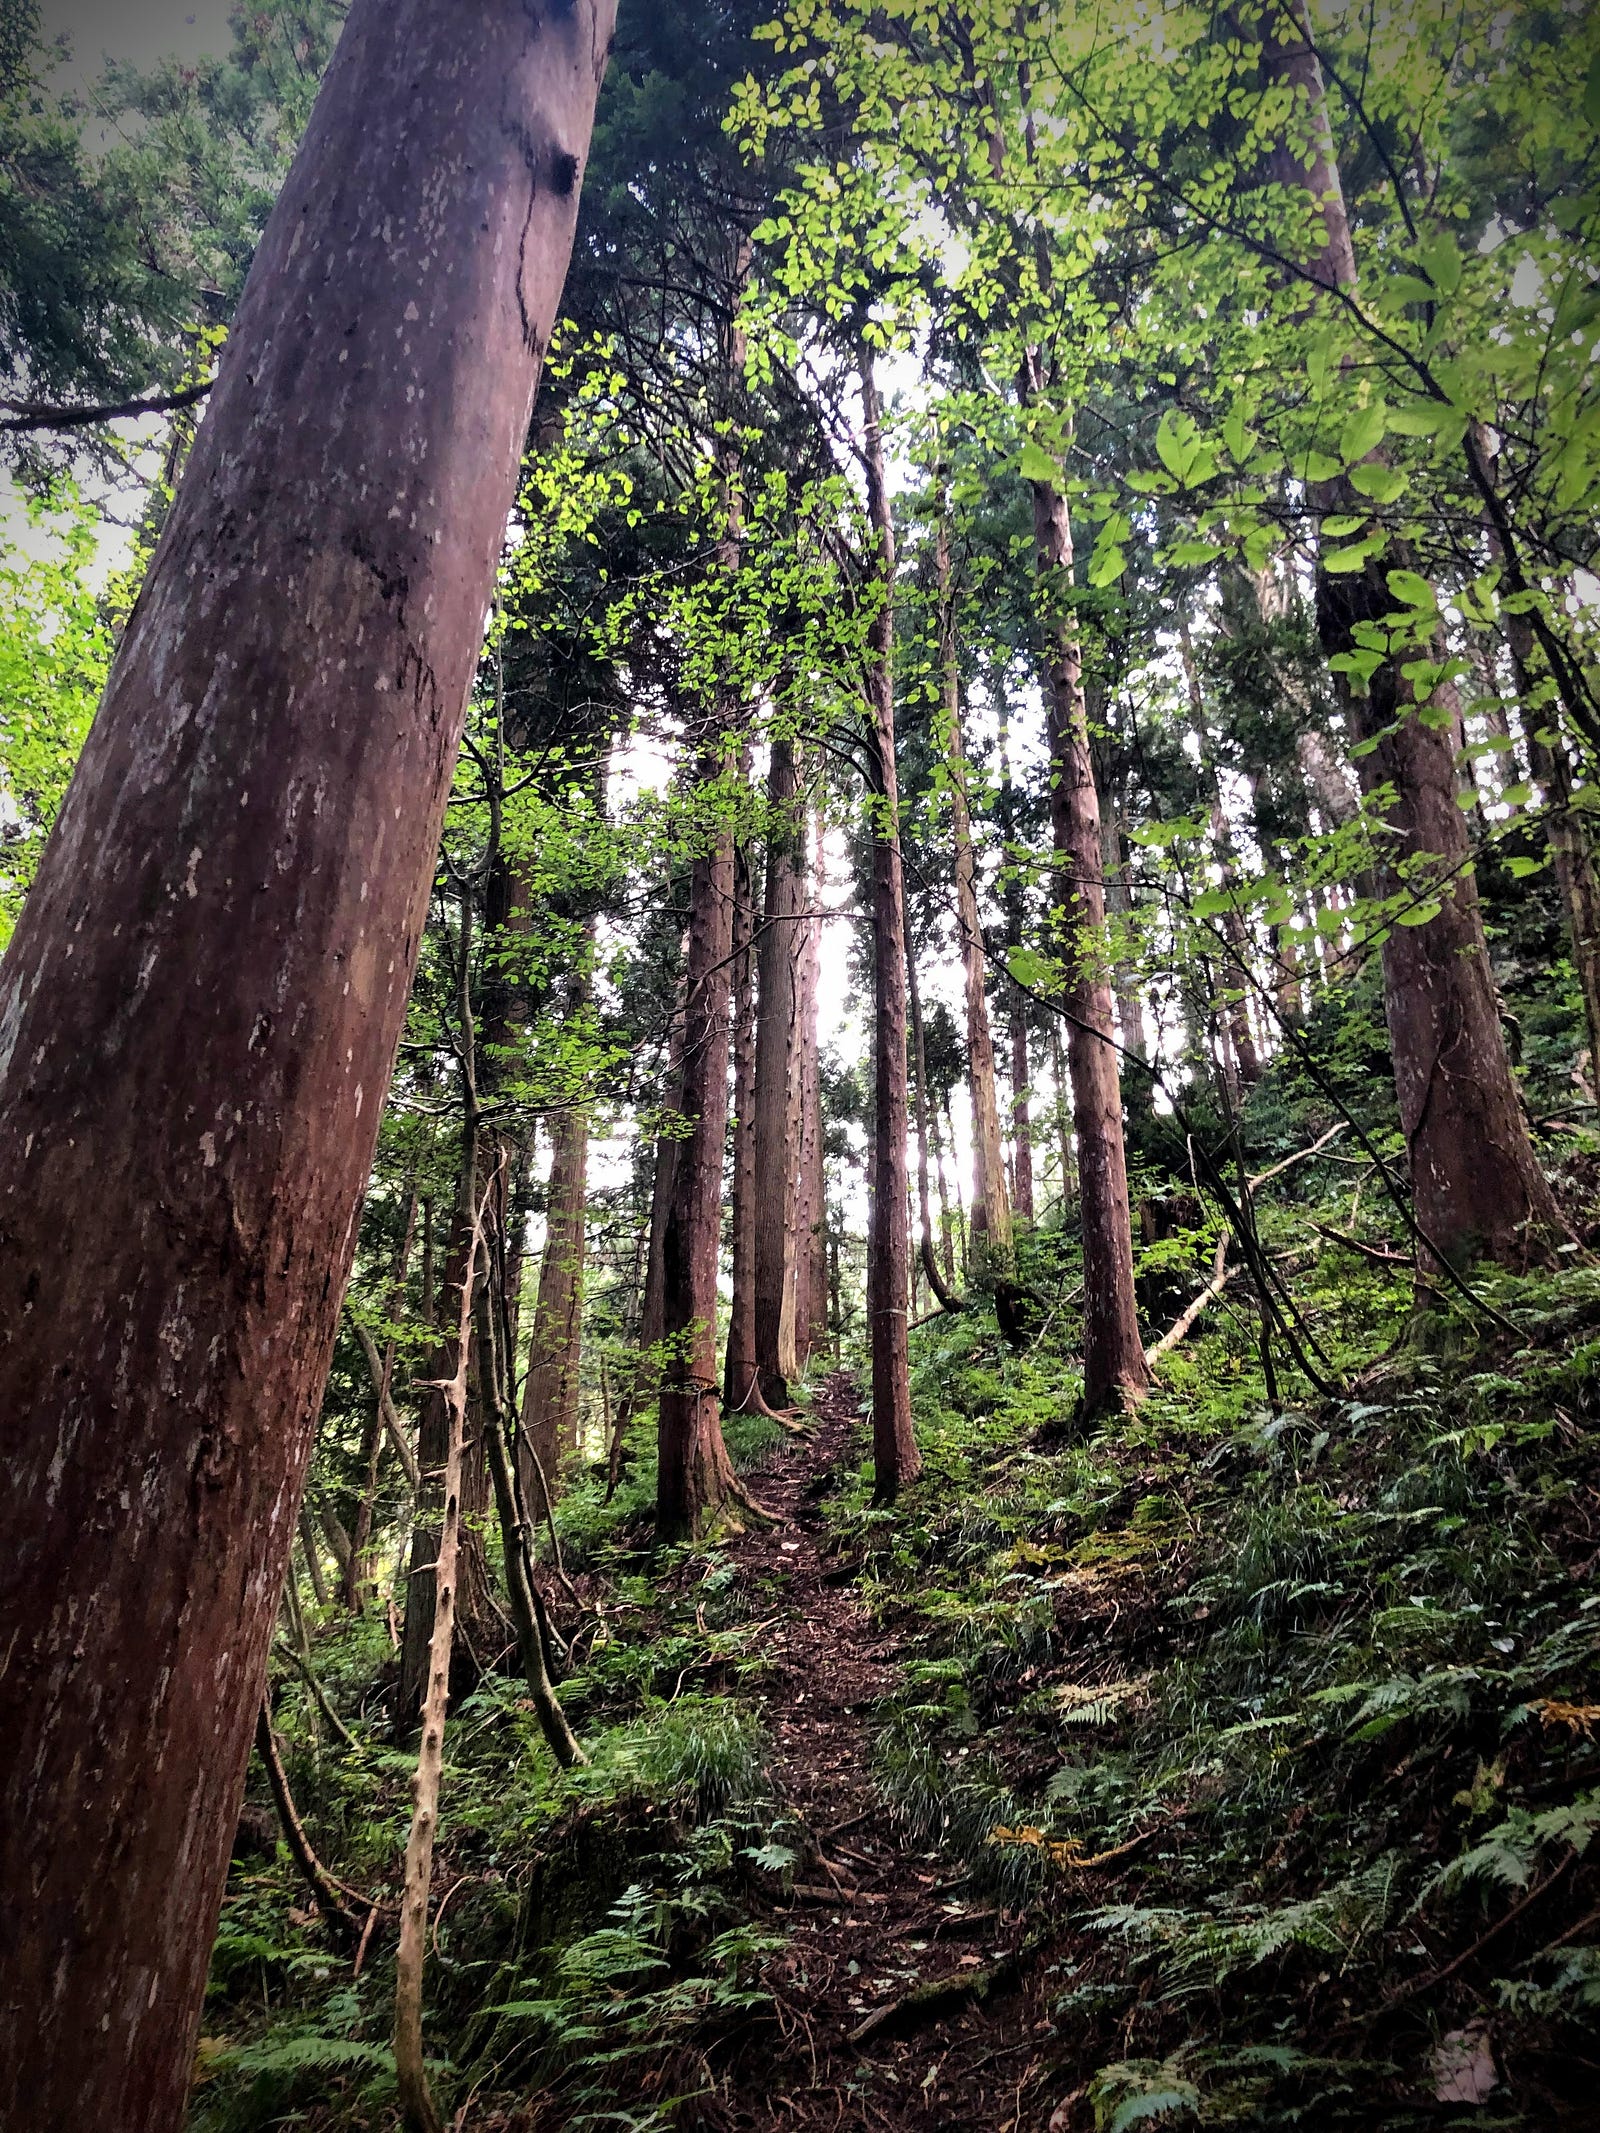 Tall thin cedar trees provide shade on the steep path up Mt. Fujikura